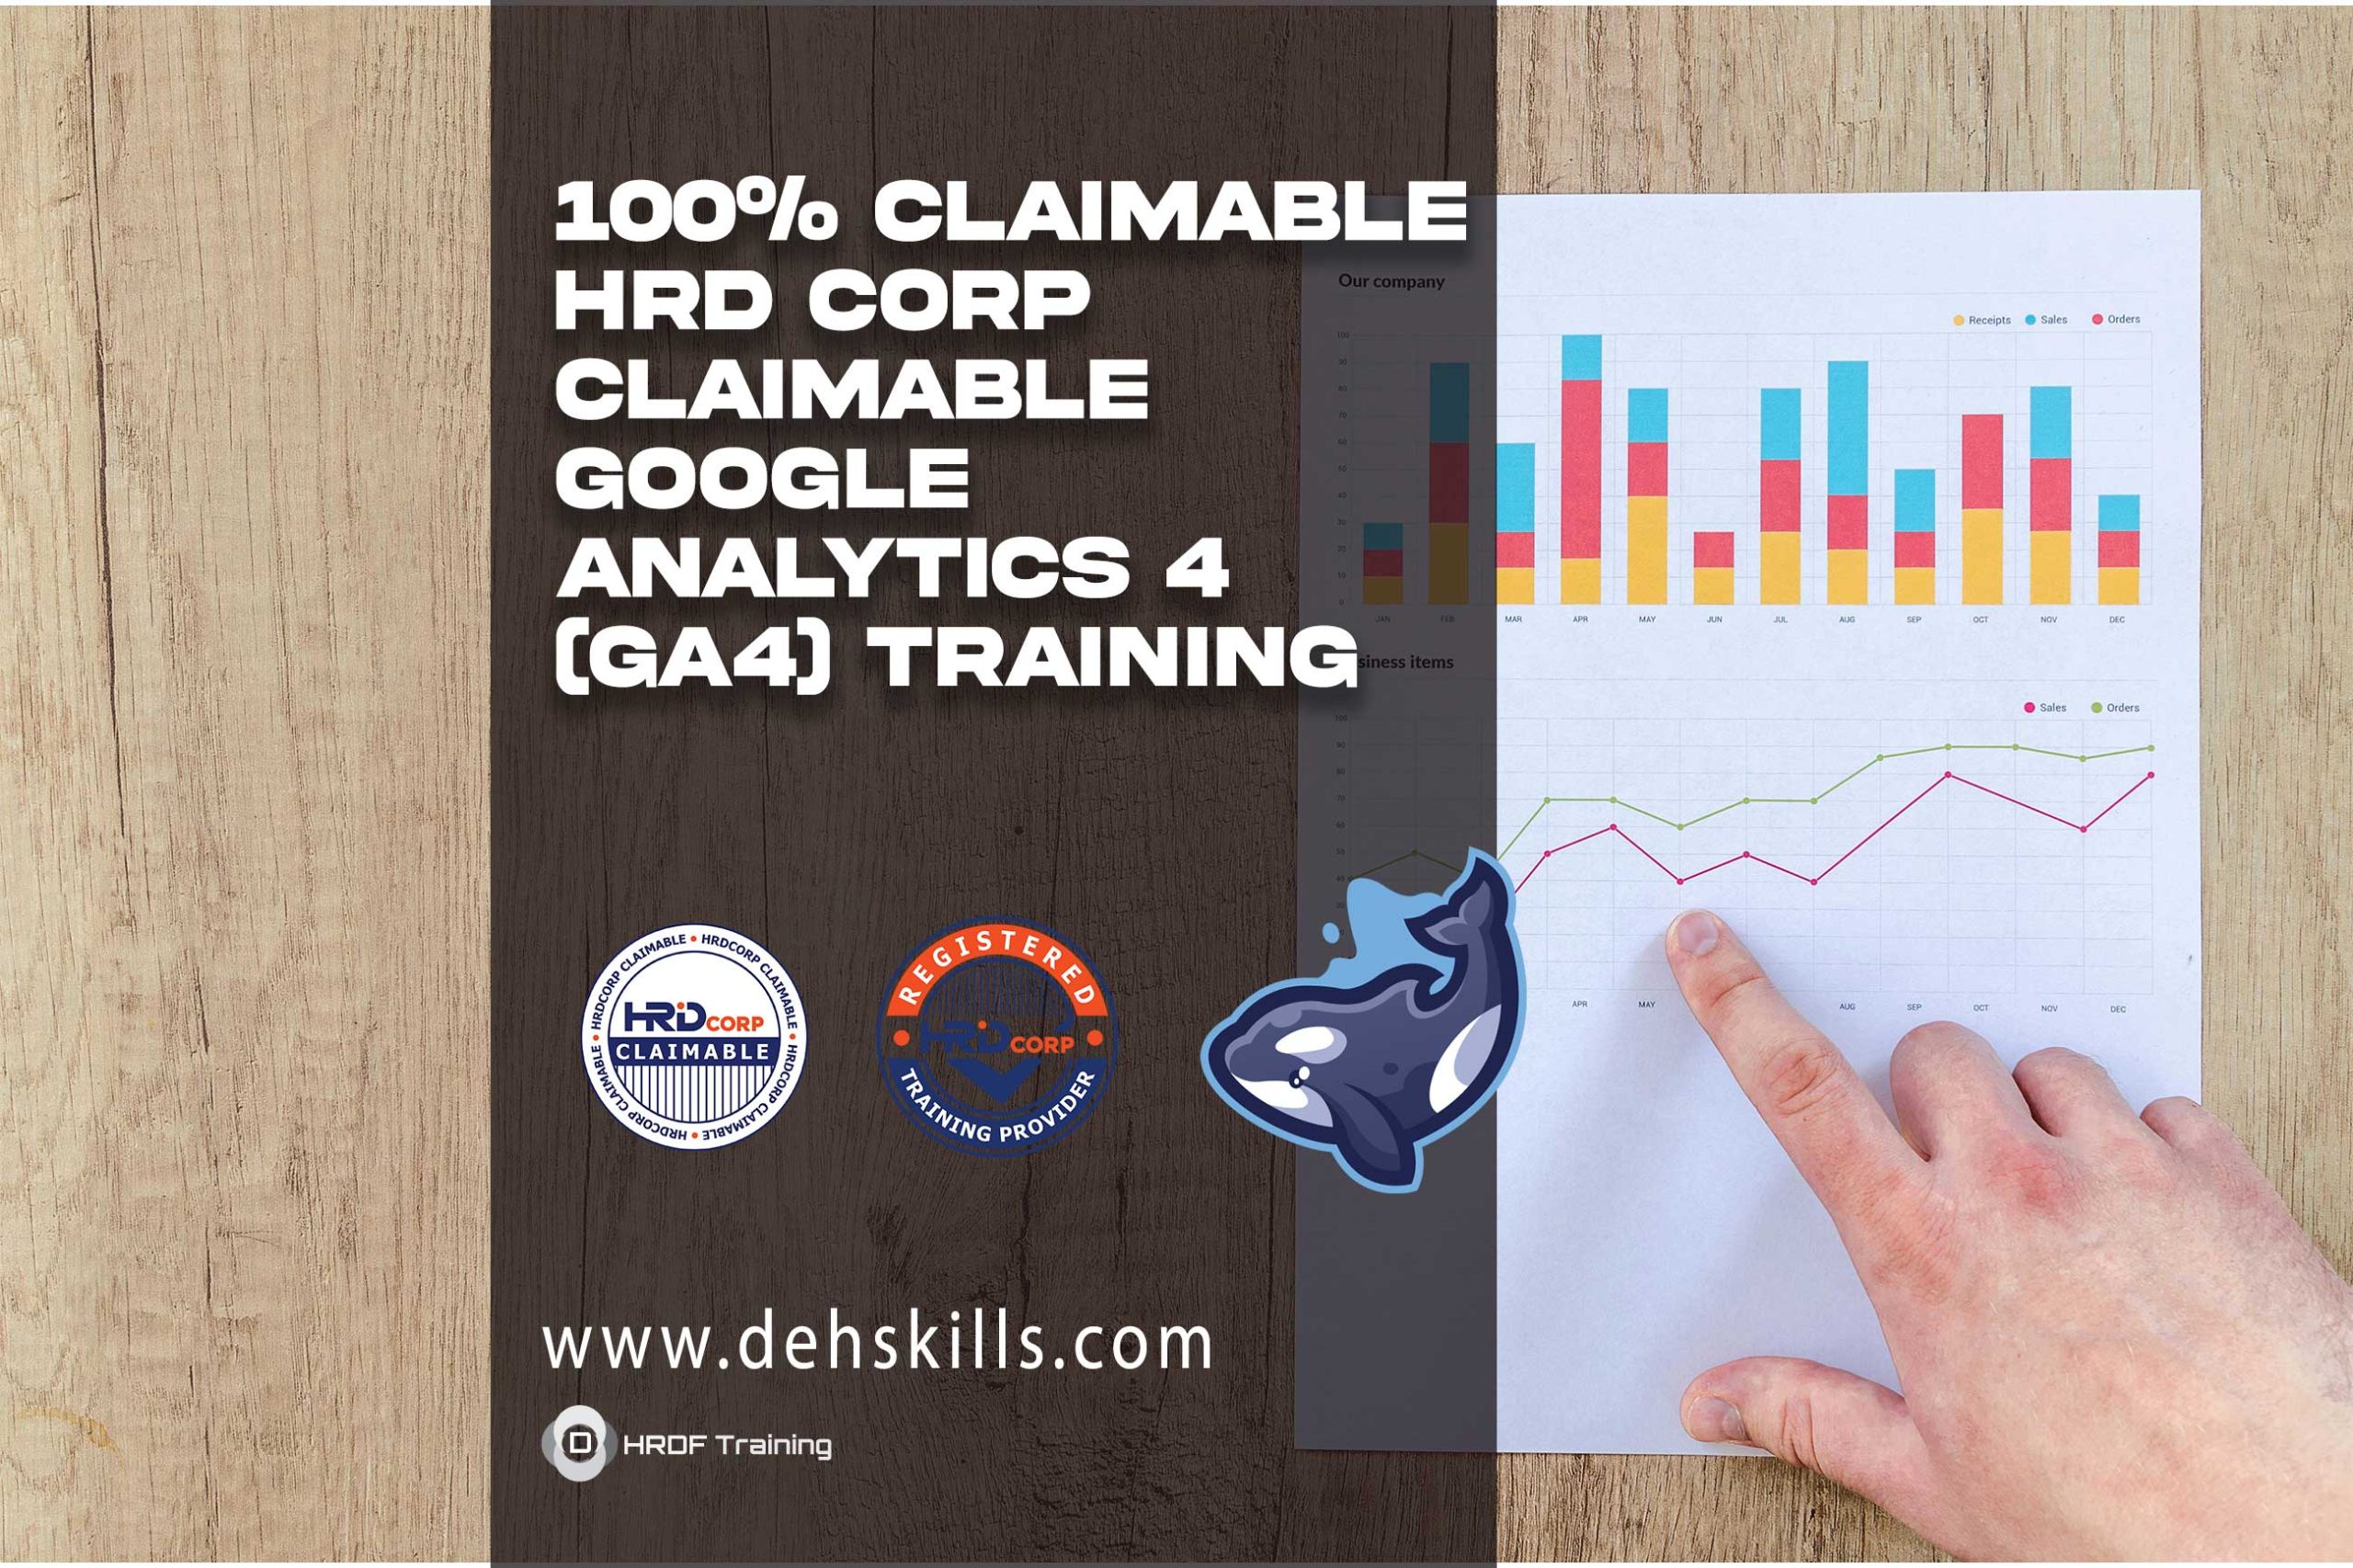 HRD-Corp-Claimable Google-Analytics-4-(GA4)-Training